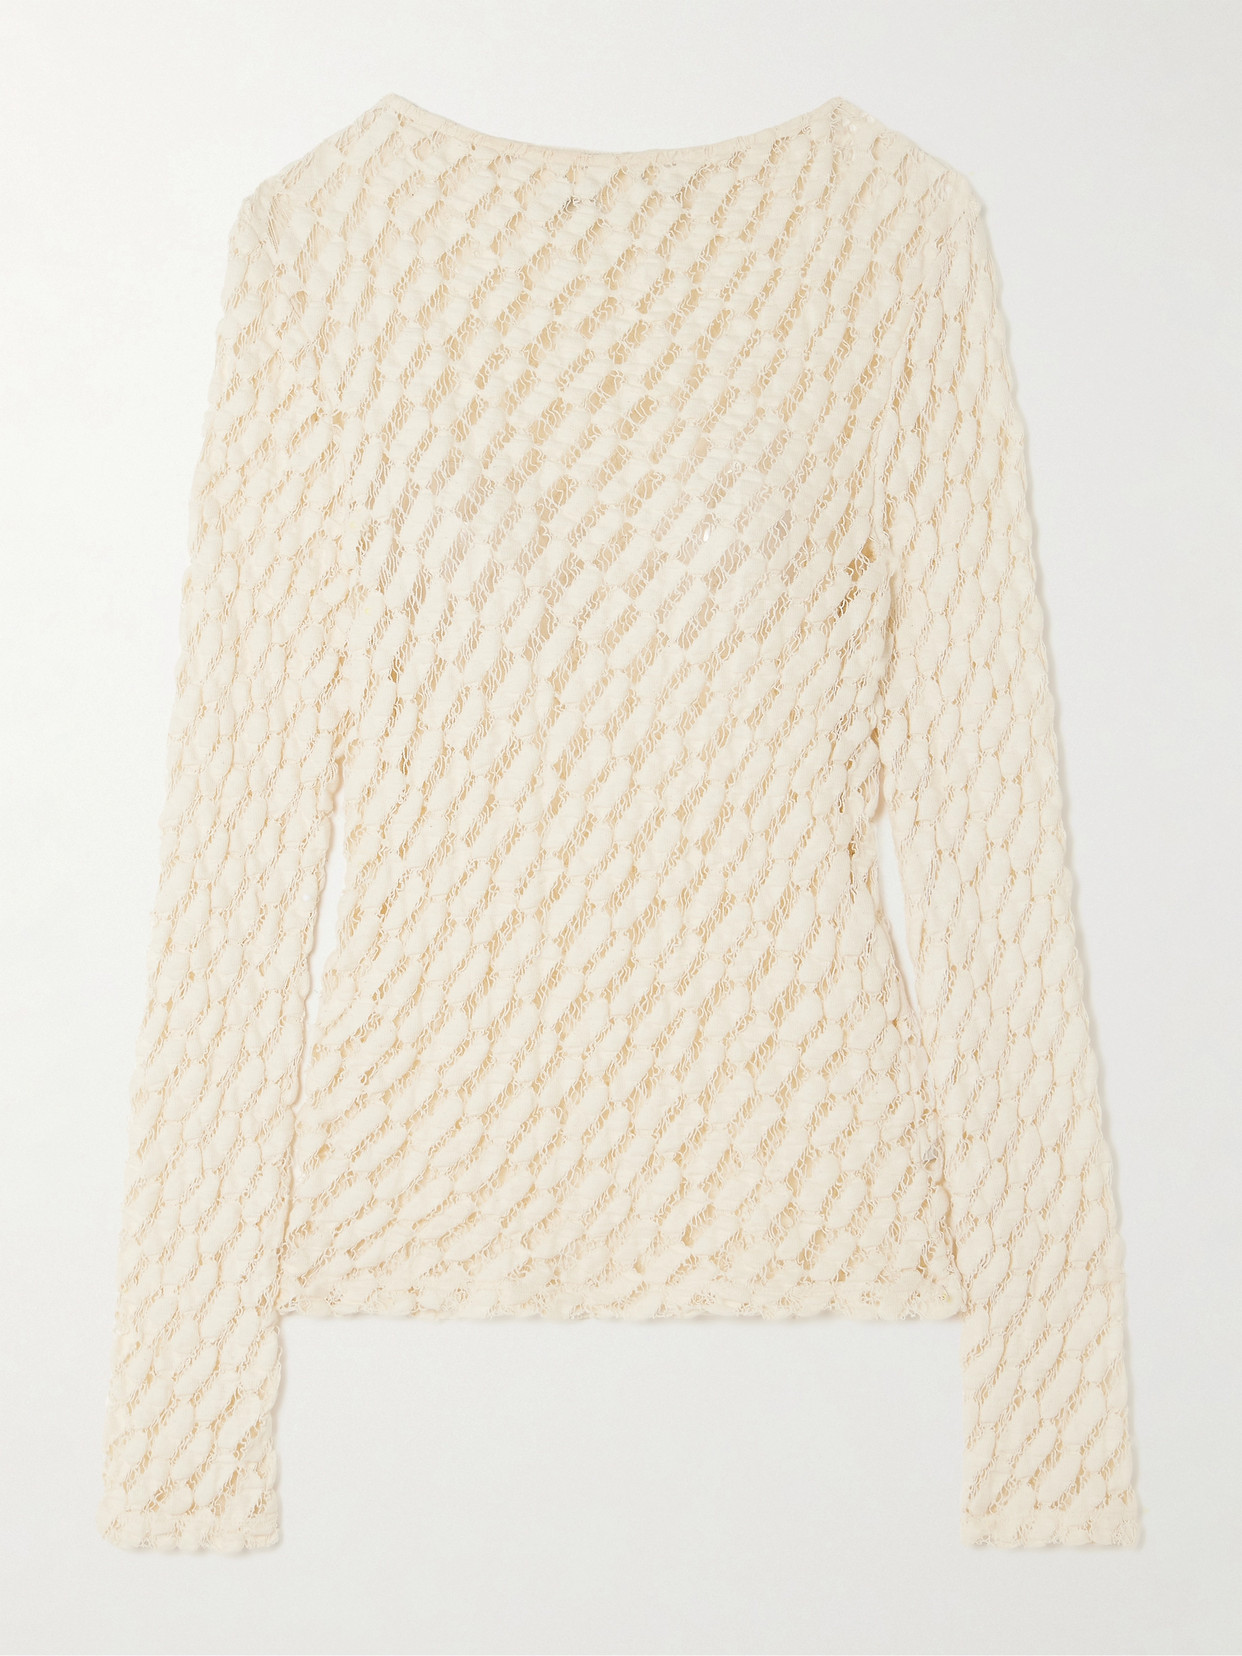 Crocheted Cotton-Blend Top